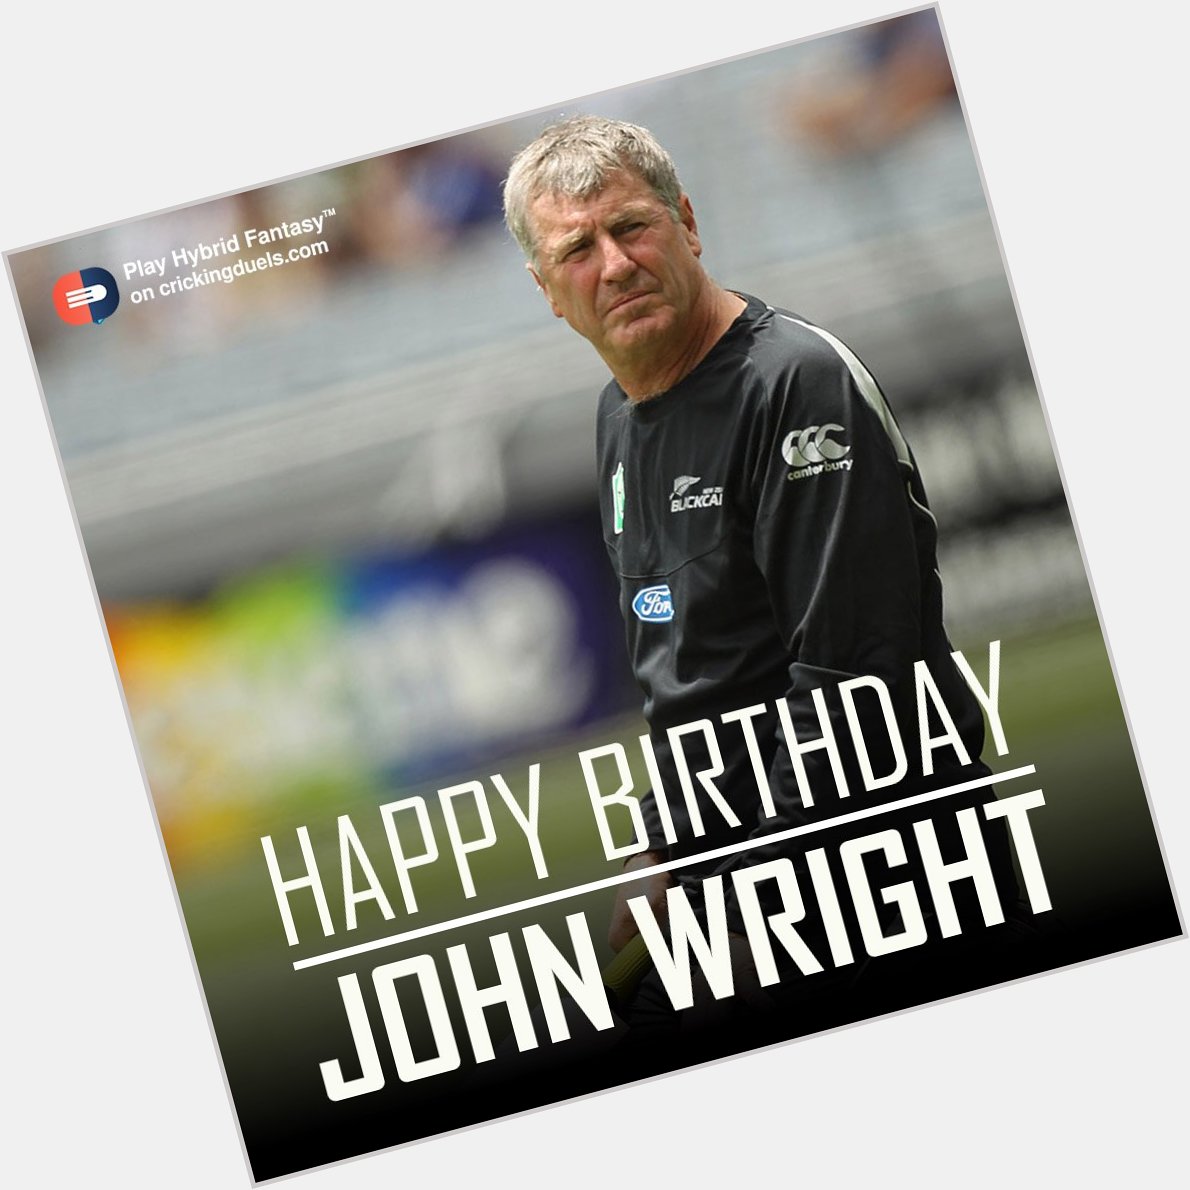 Happy Birthday John Wright. The former New Zealand cricketer turns 63 today. 